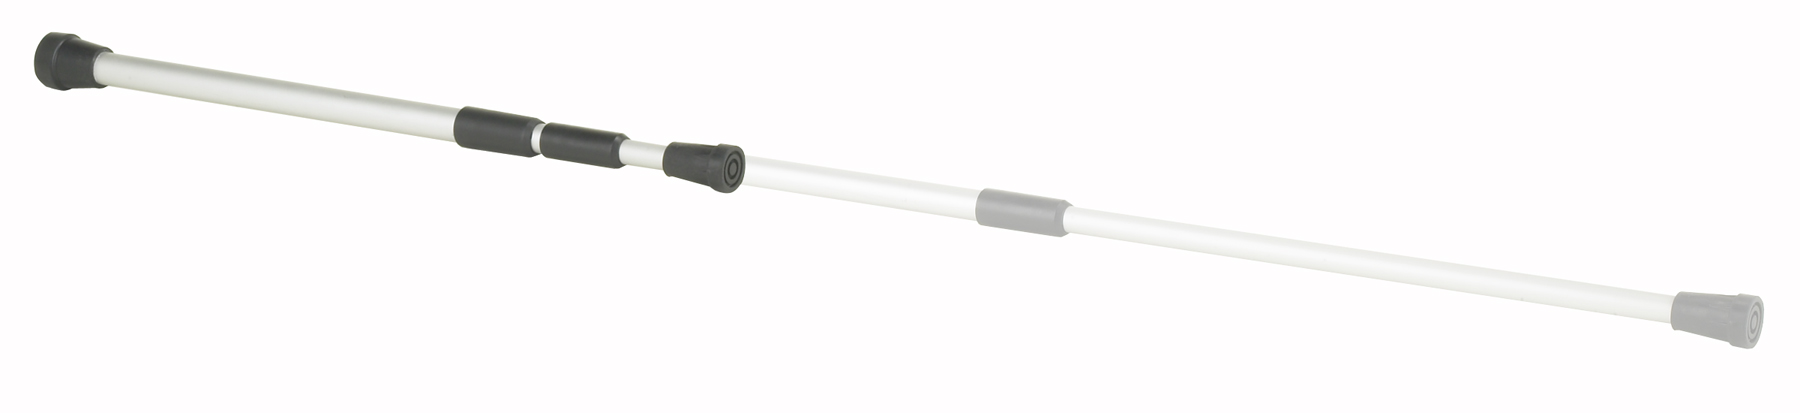 OTC 4705 Telescopic Support Rod 